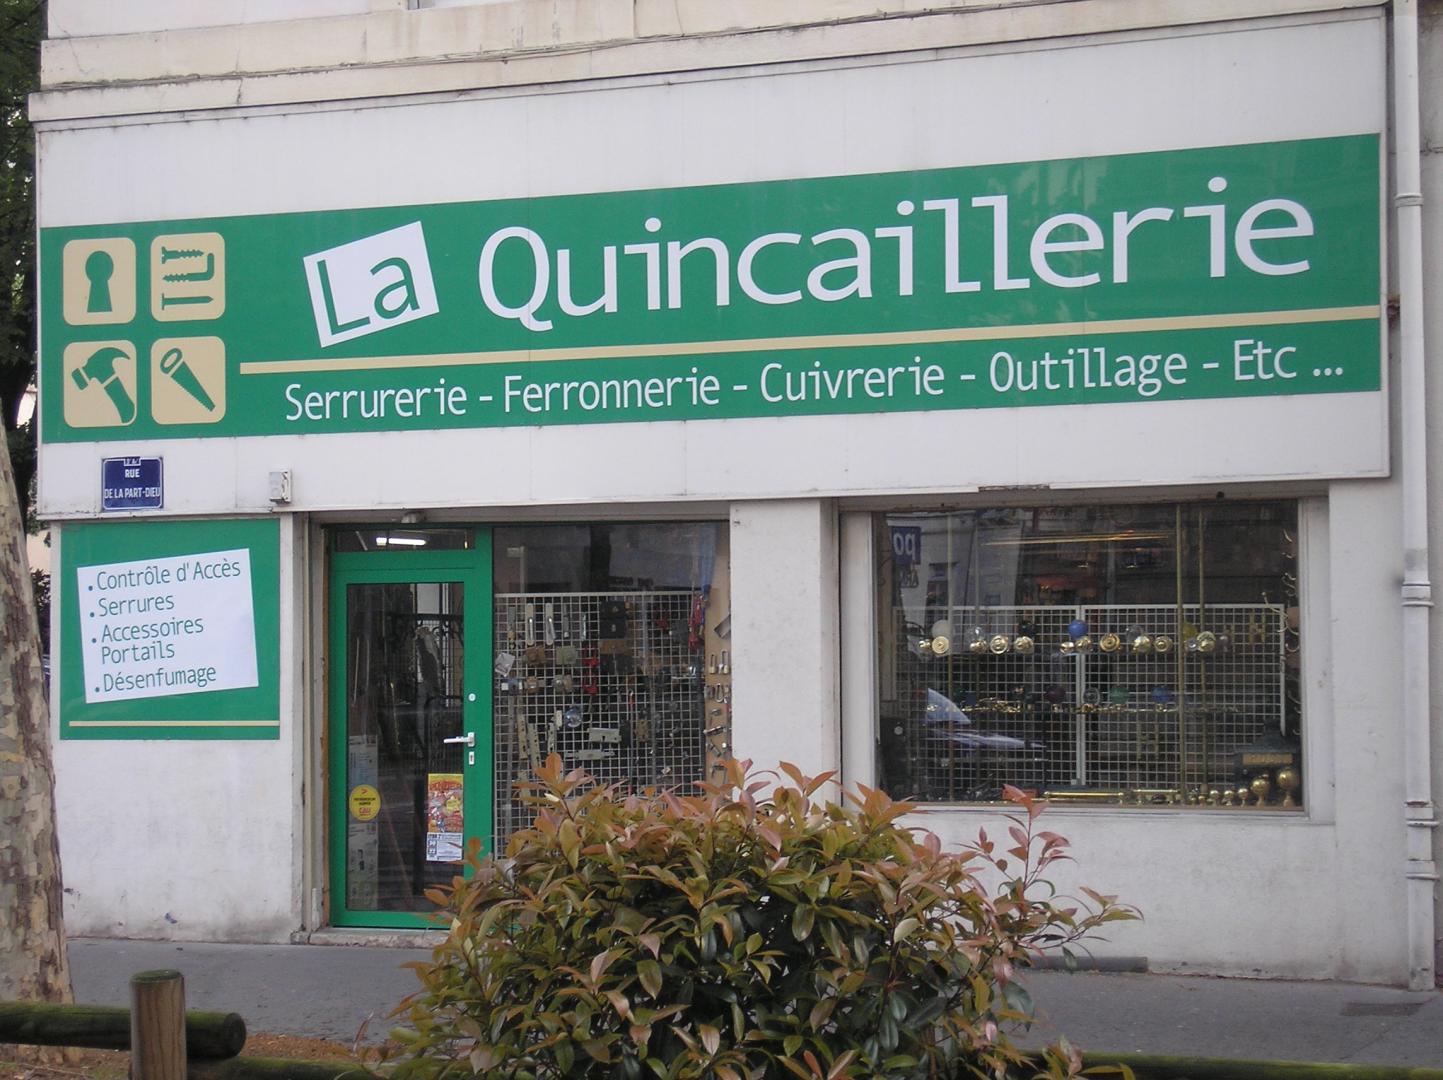 Quincaillerie, Lyon - La Quincaillerie - Serrurerie, Ferronerie